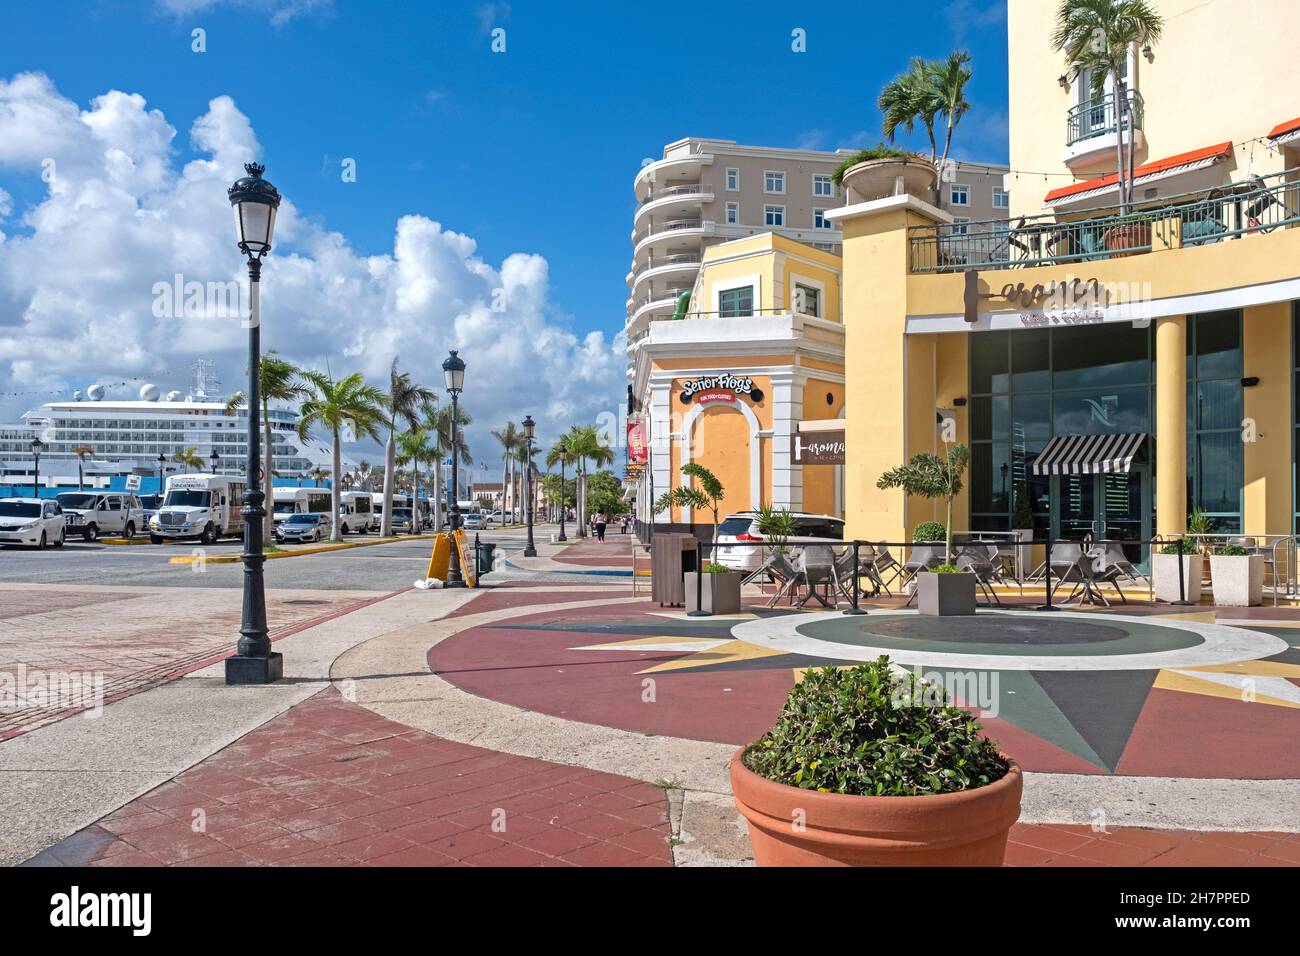 Boulevard in Old San Juan / Viejo San Juan, historic colonial district in the capital city San Juan, Puerto Rico, Greater Antilles, Caribbean Stock Photo